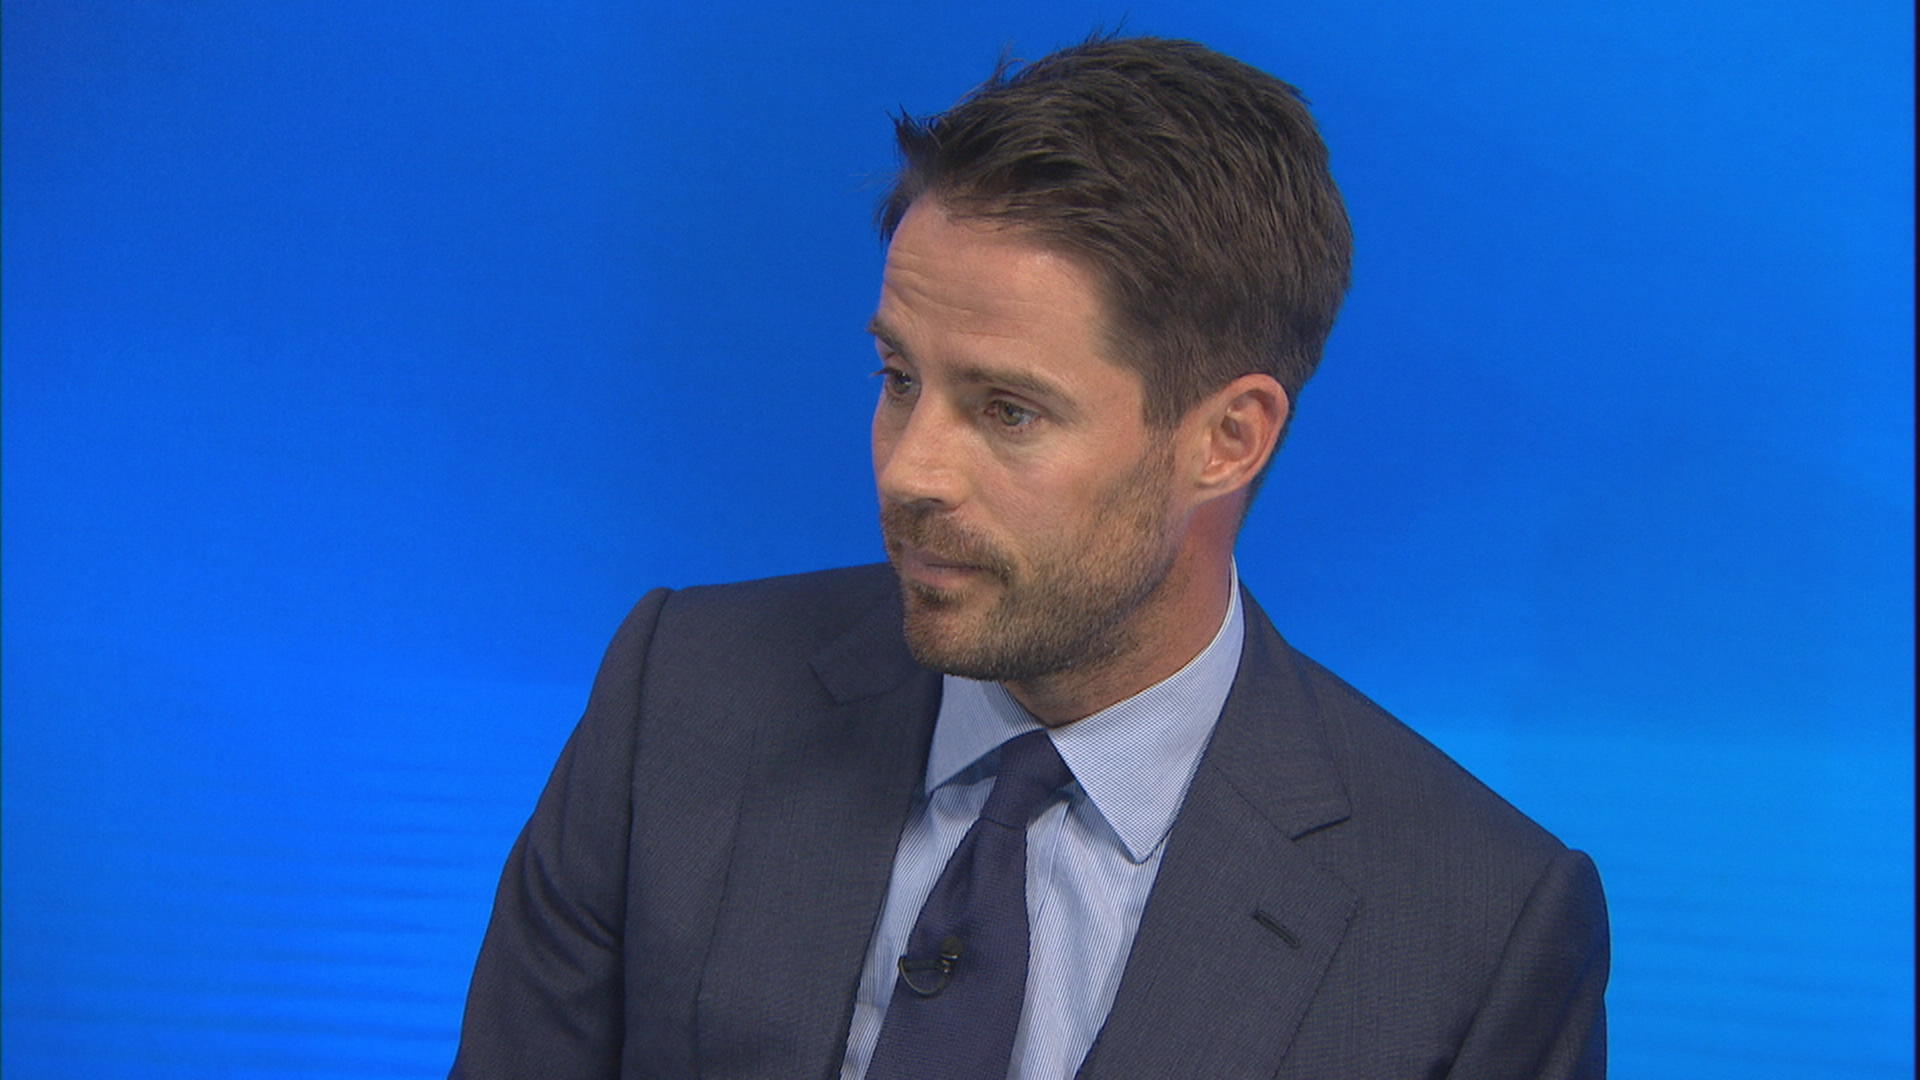 Jamie Redknapp cautions Antonio Conte about the current situation at Tottenham Hotspur